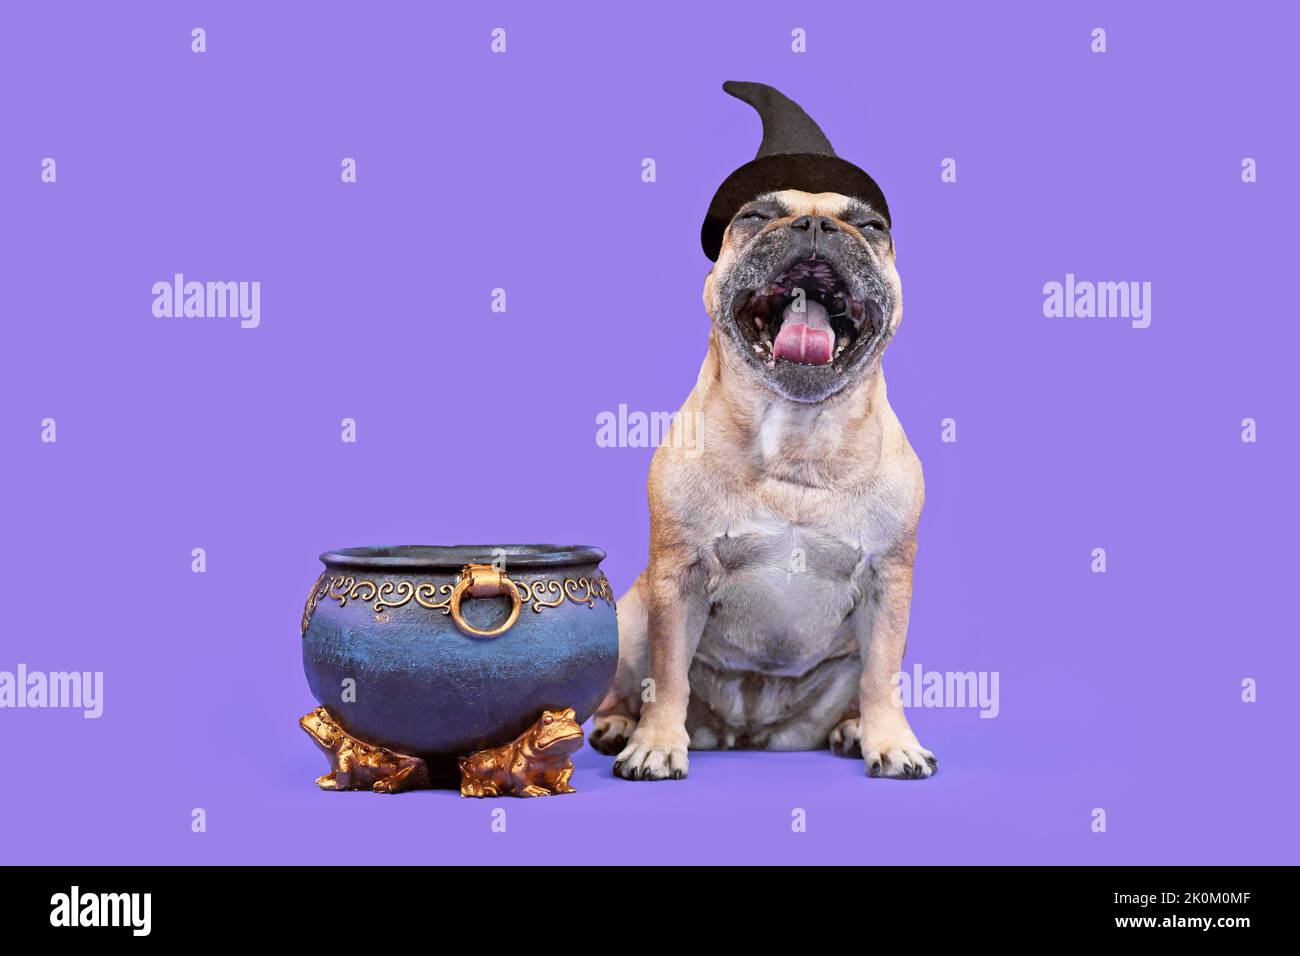 Perro Bulldog francés riendo con sombrero de bruja de disfraz de Halloween junto a la caldera sobre fondo púrpura Foto de stock